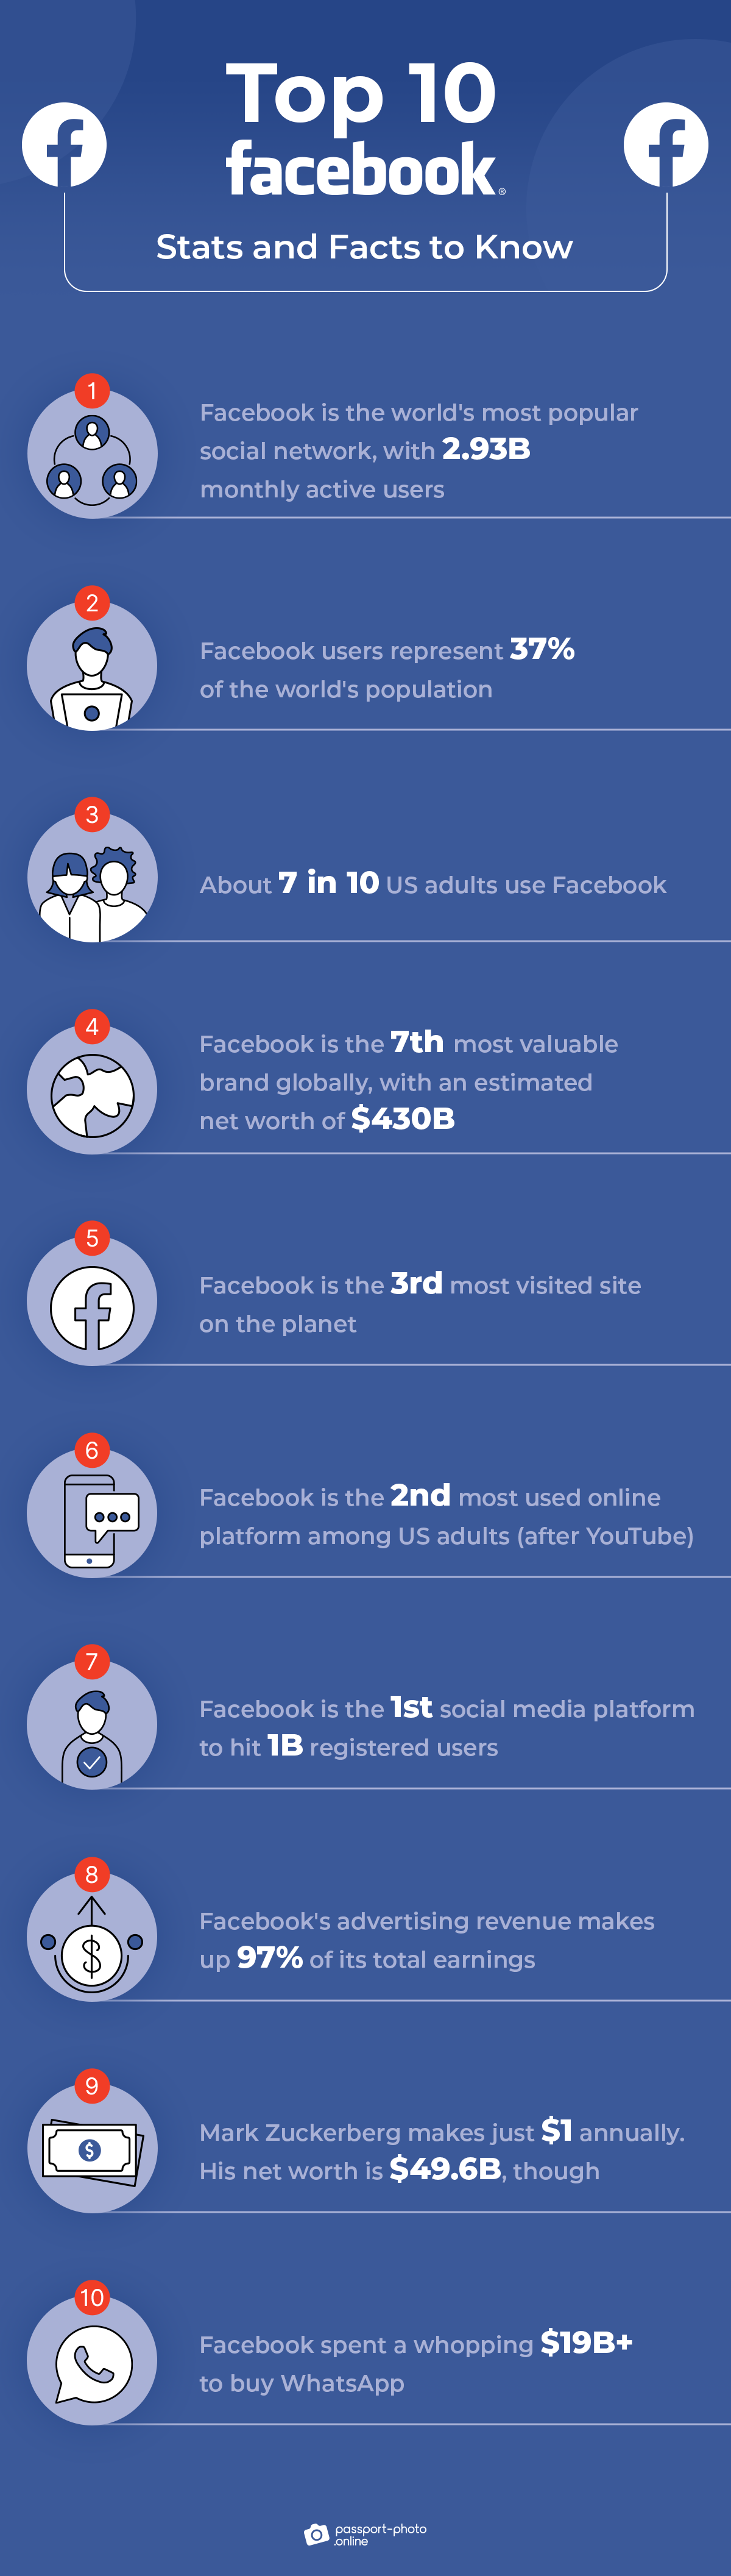 top 10 facebook statistics